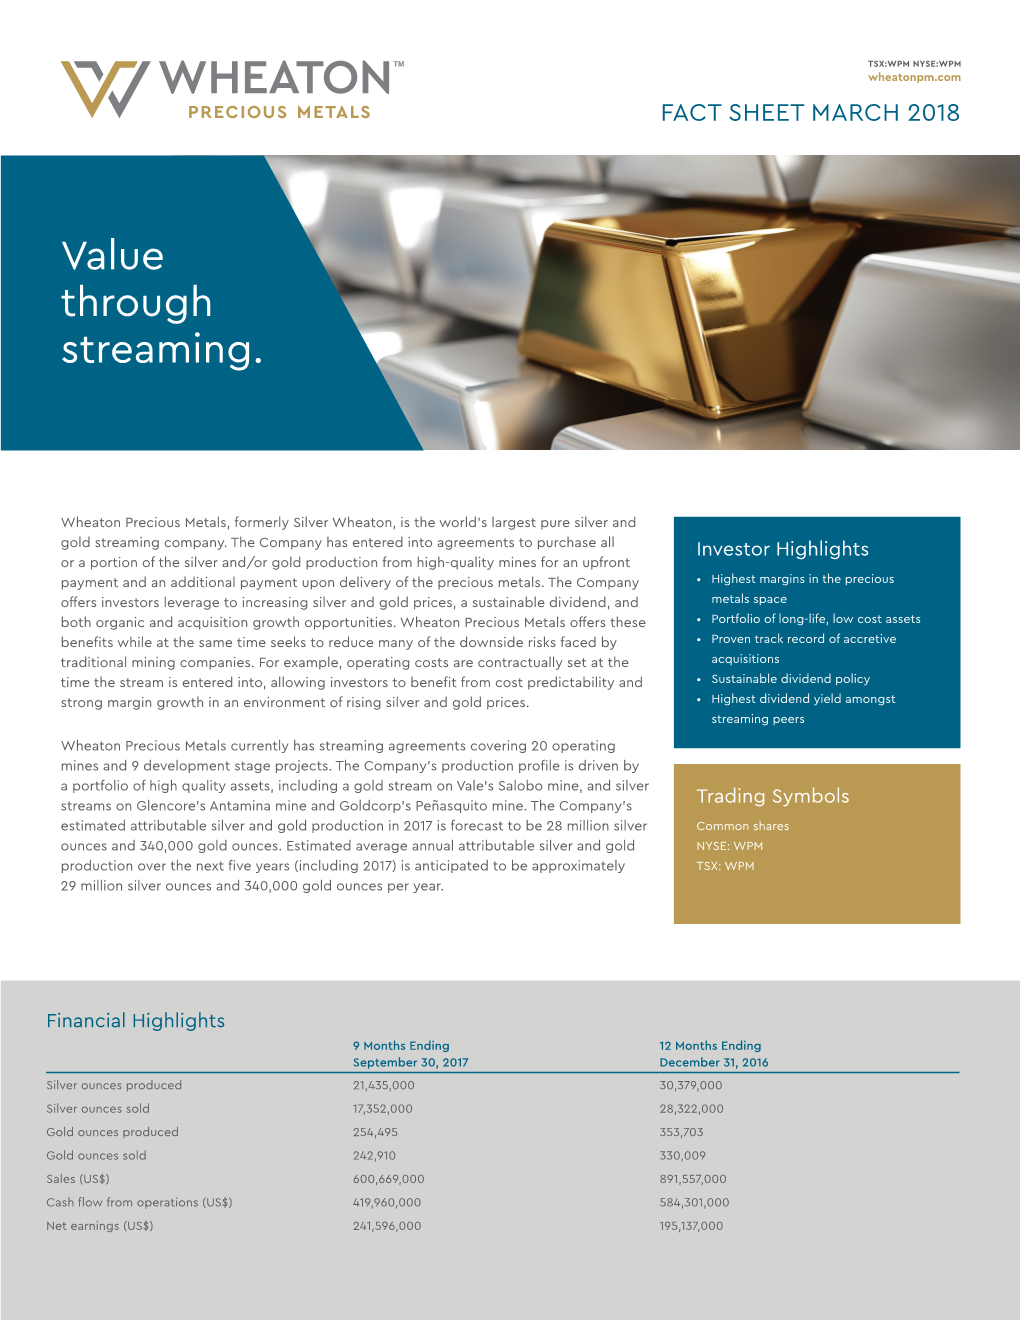 Value Through Streaming